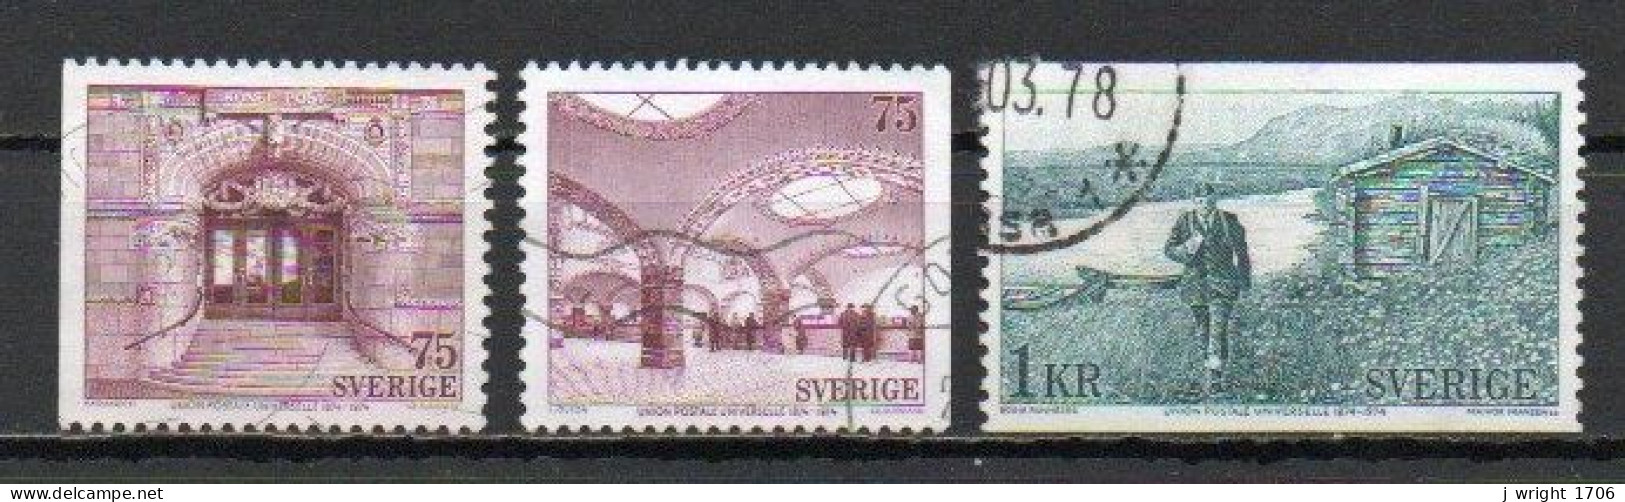 Sweden, 1974, UPU Centenary, Set, USED - Oblitérés